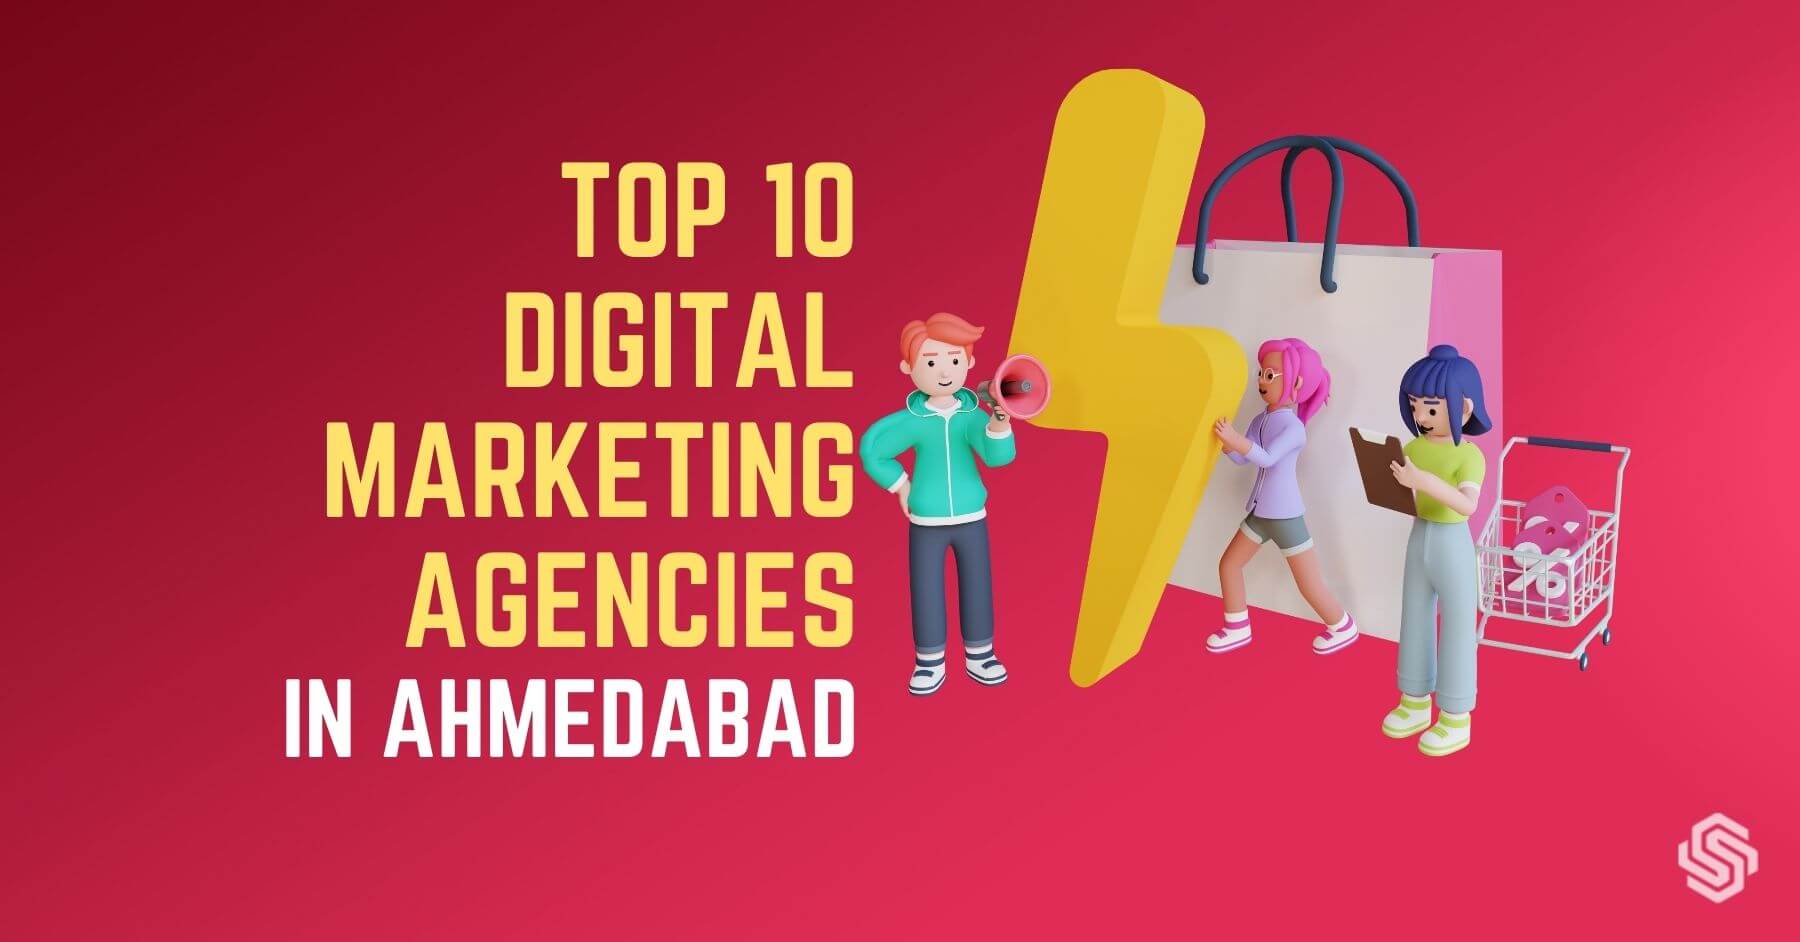 Top 10 Digital Marketing Agencies in Ahmedabad